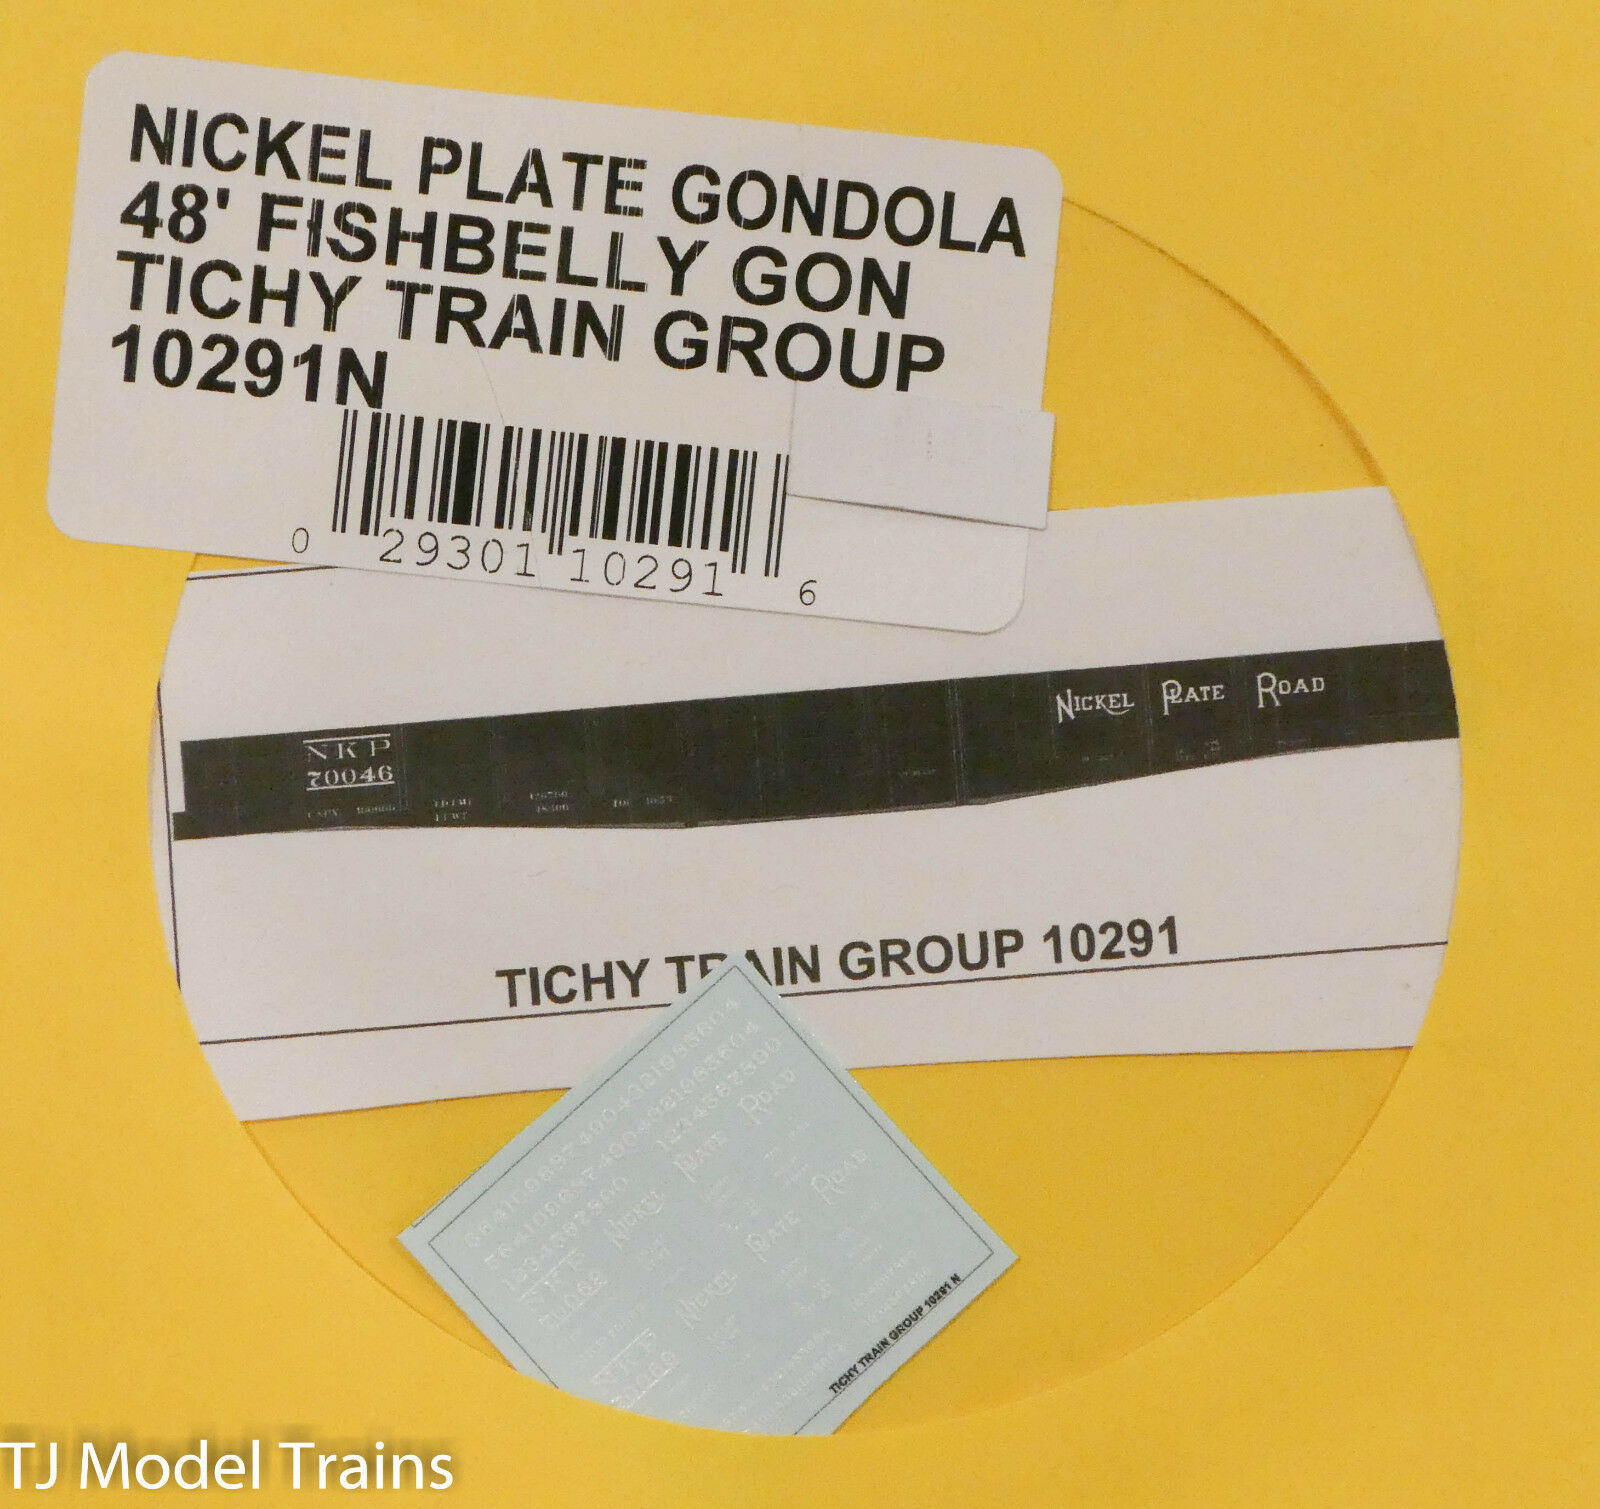 Tichy Train Group N #10291n Nickel Plate Gondola (48' Fishbelly Gon.)